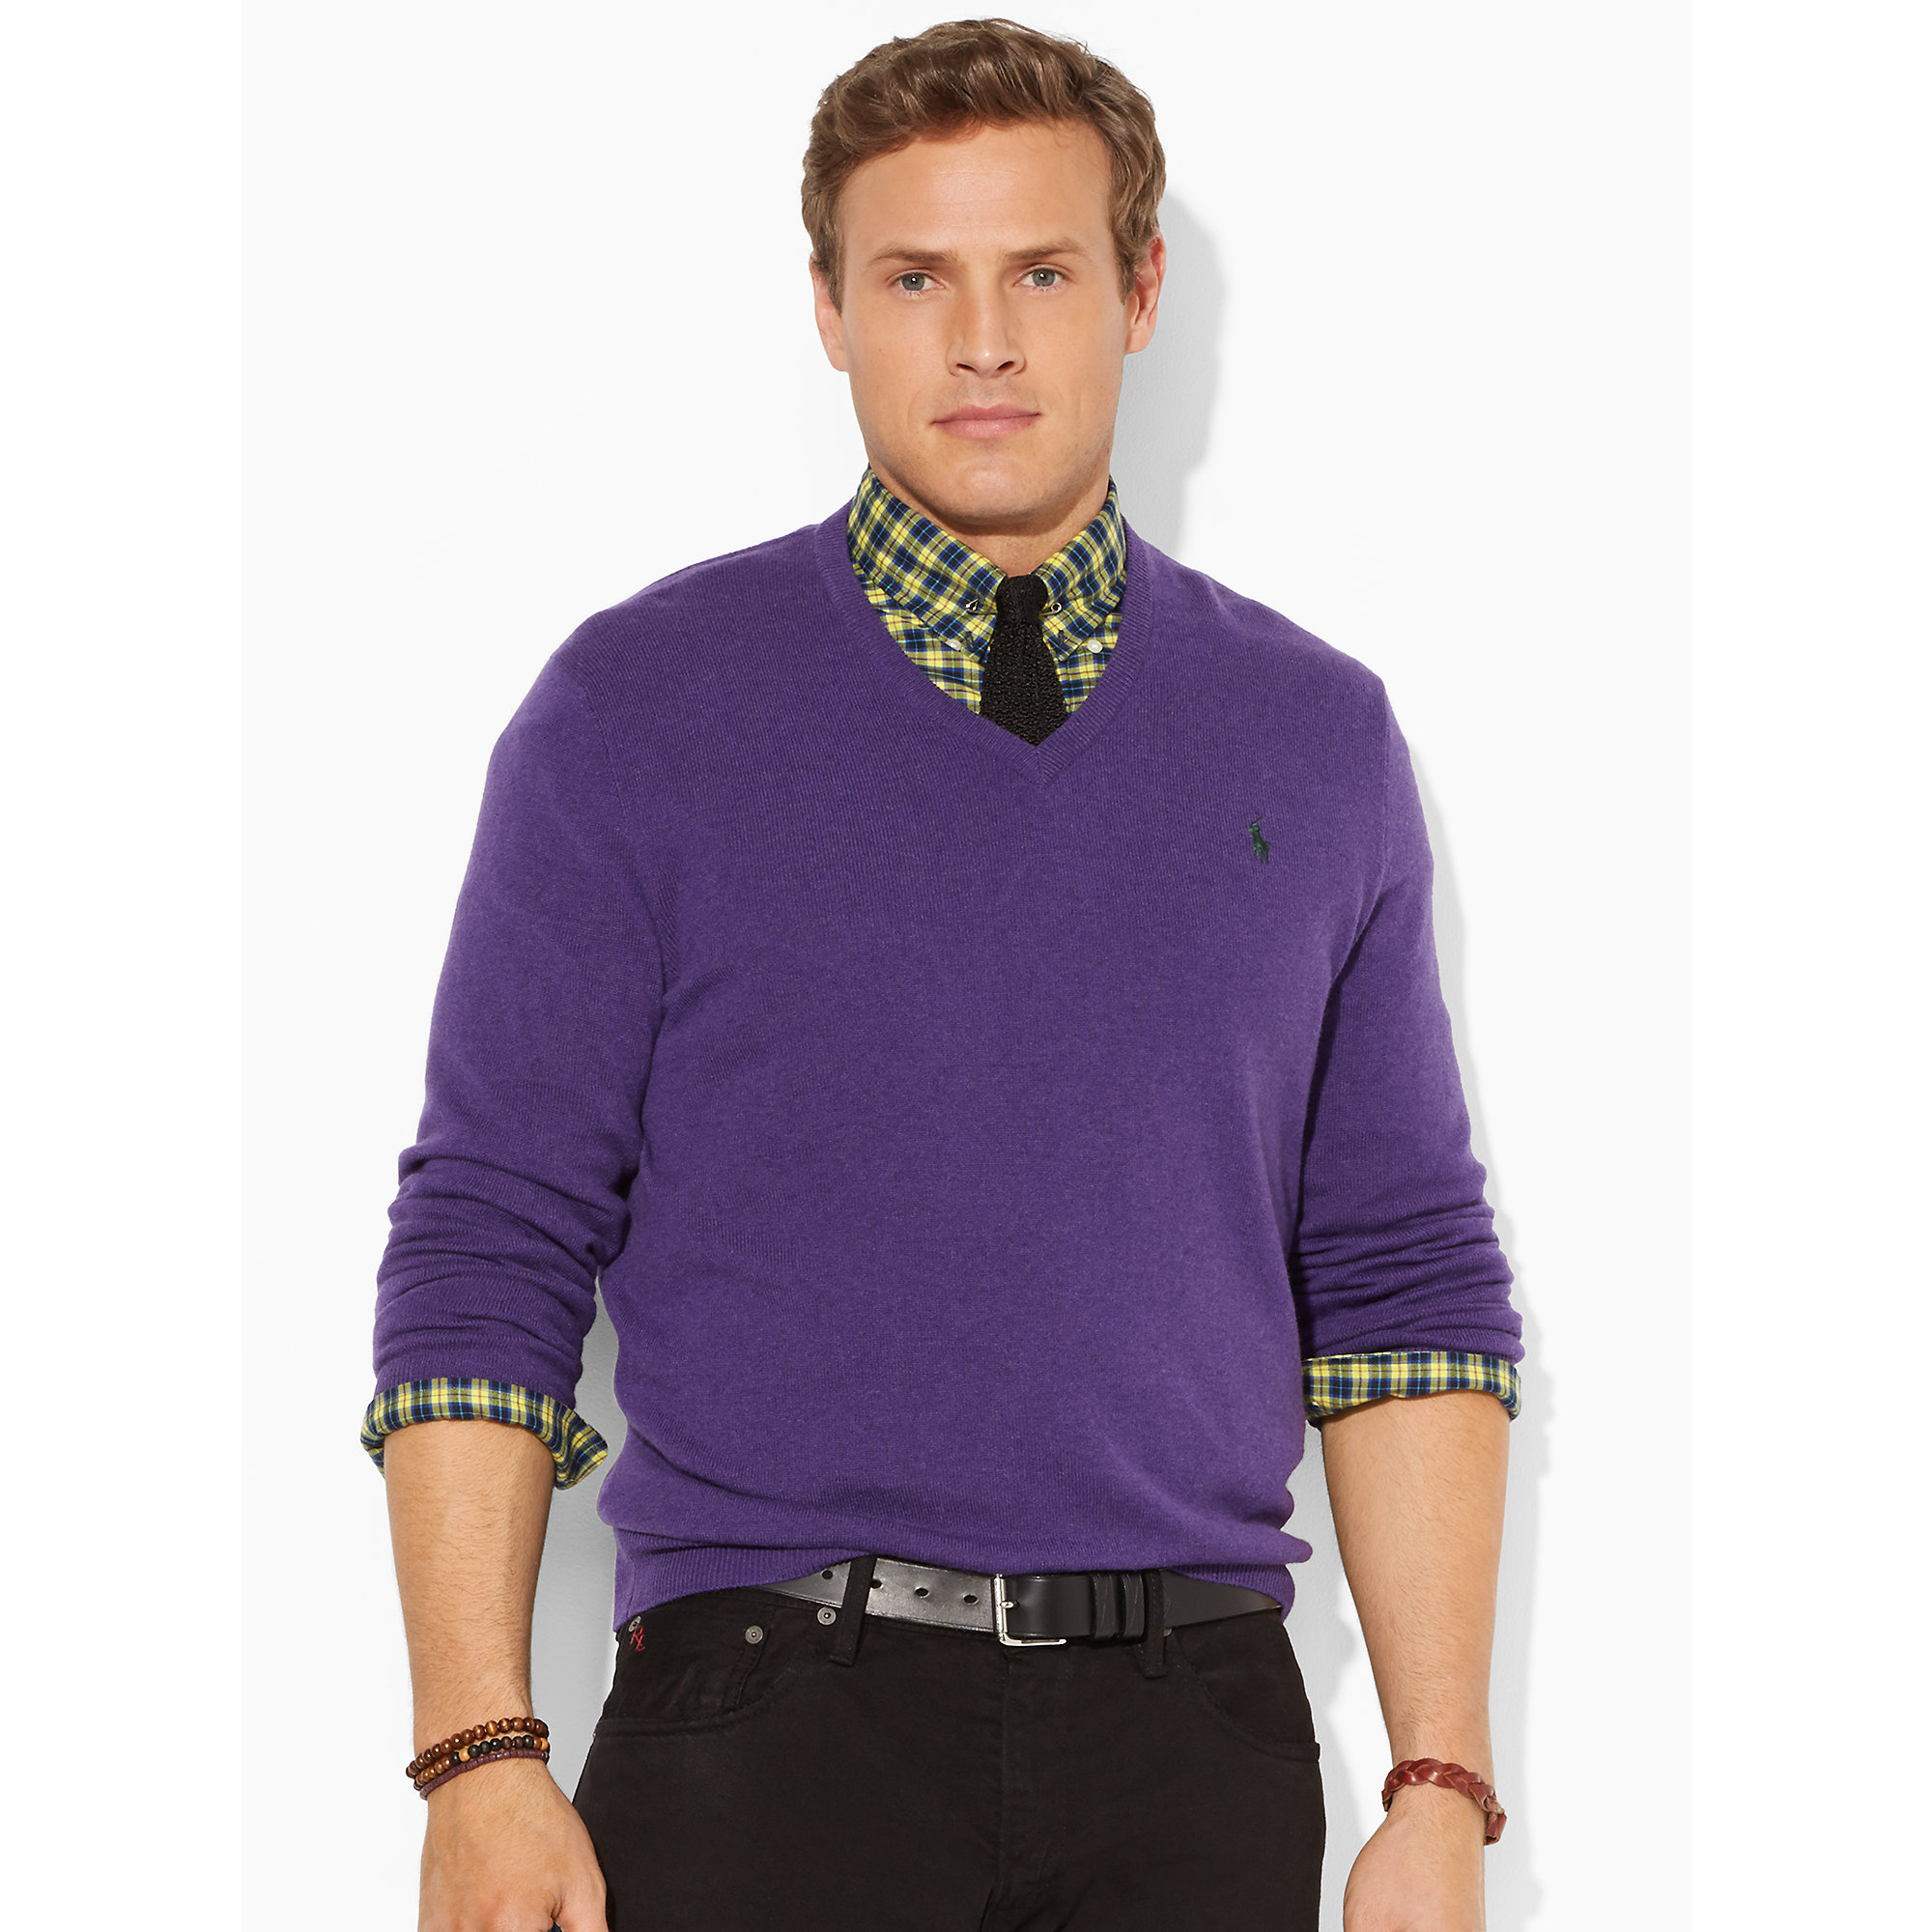 Lyst - Ralph Lauren Merino Wool V-Neck Sweater in Purple for Men